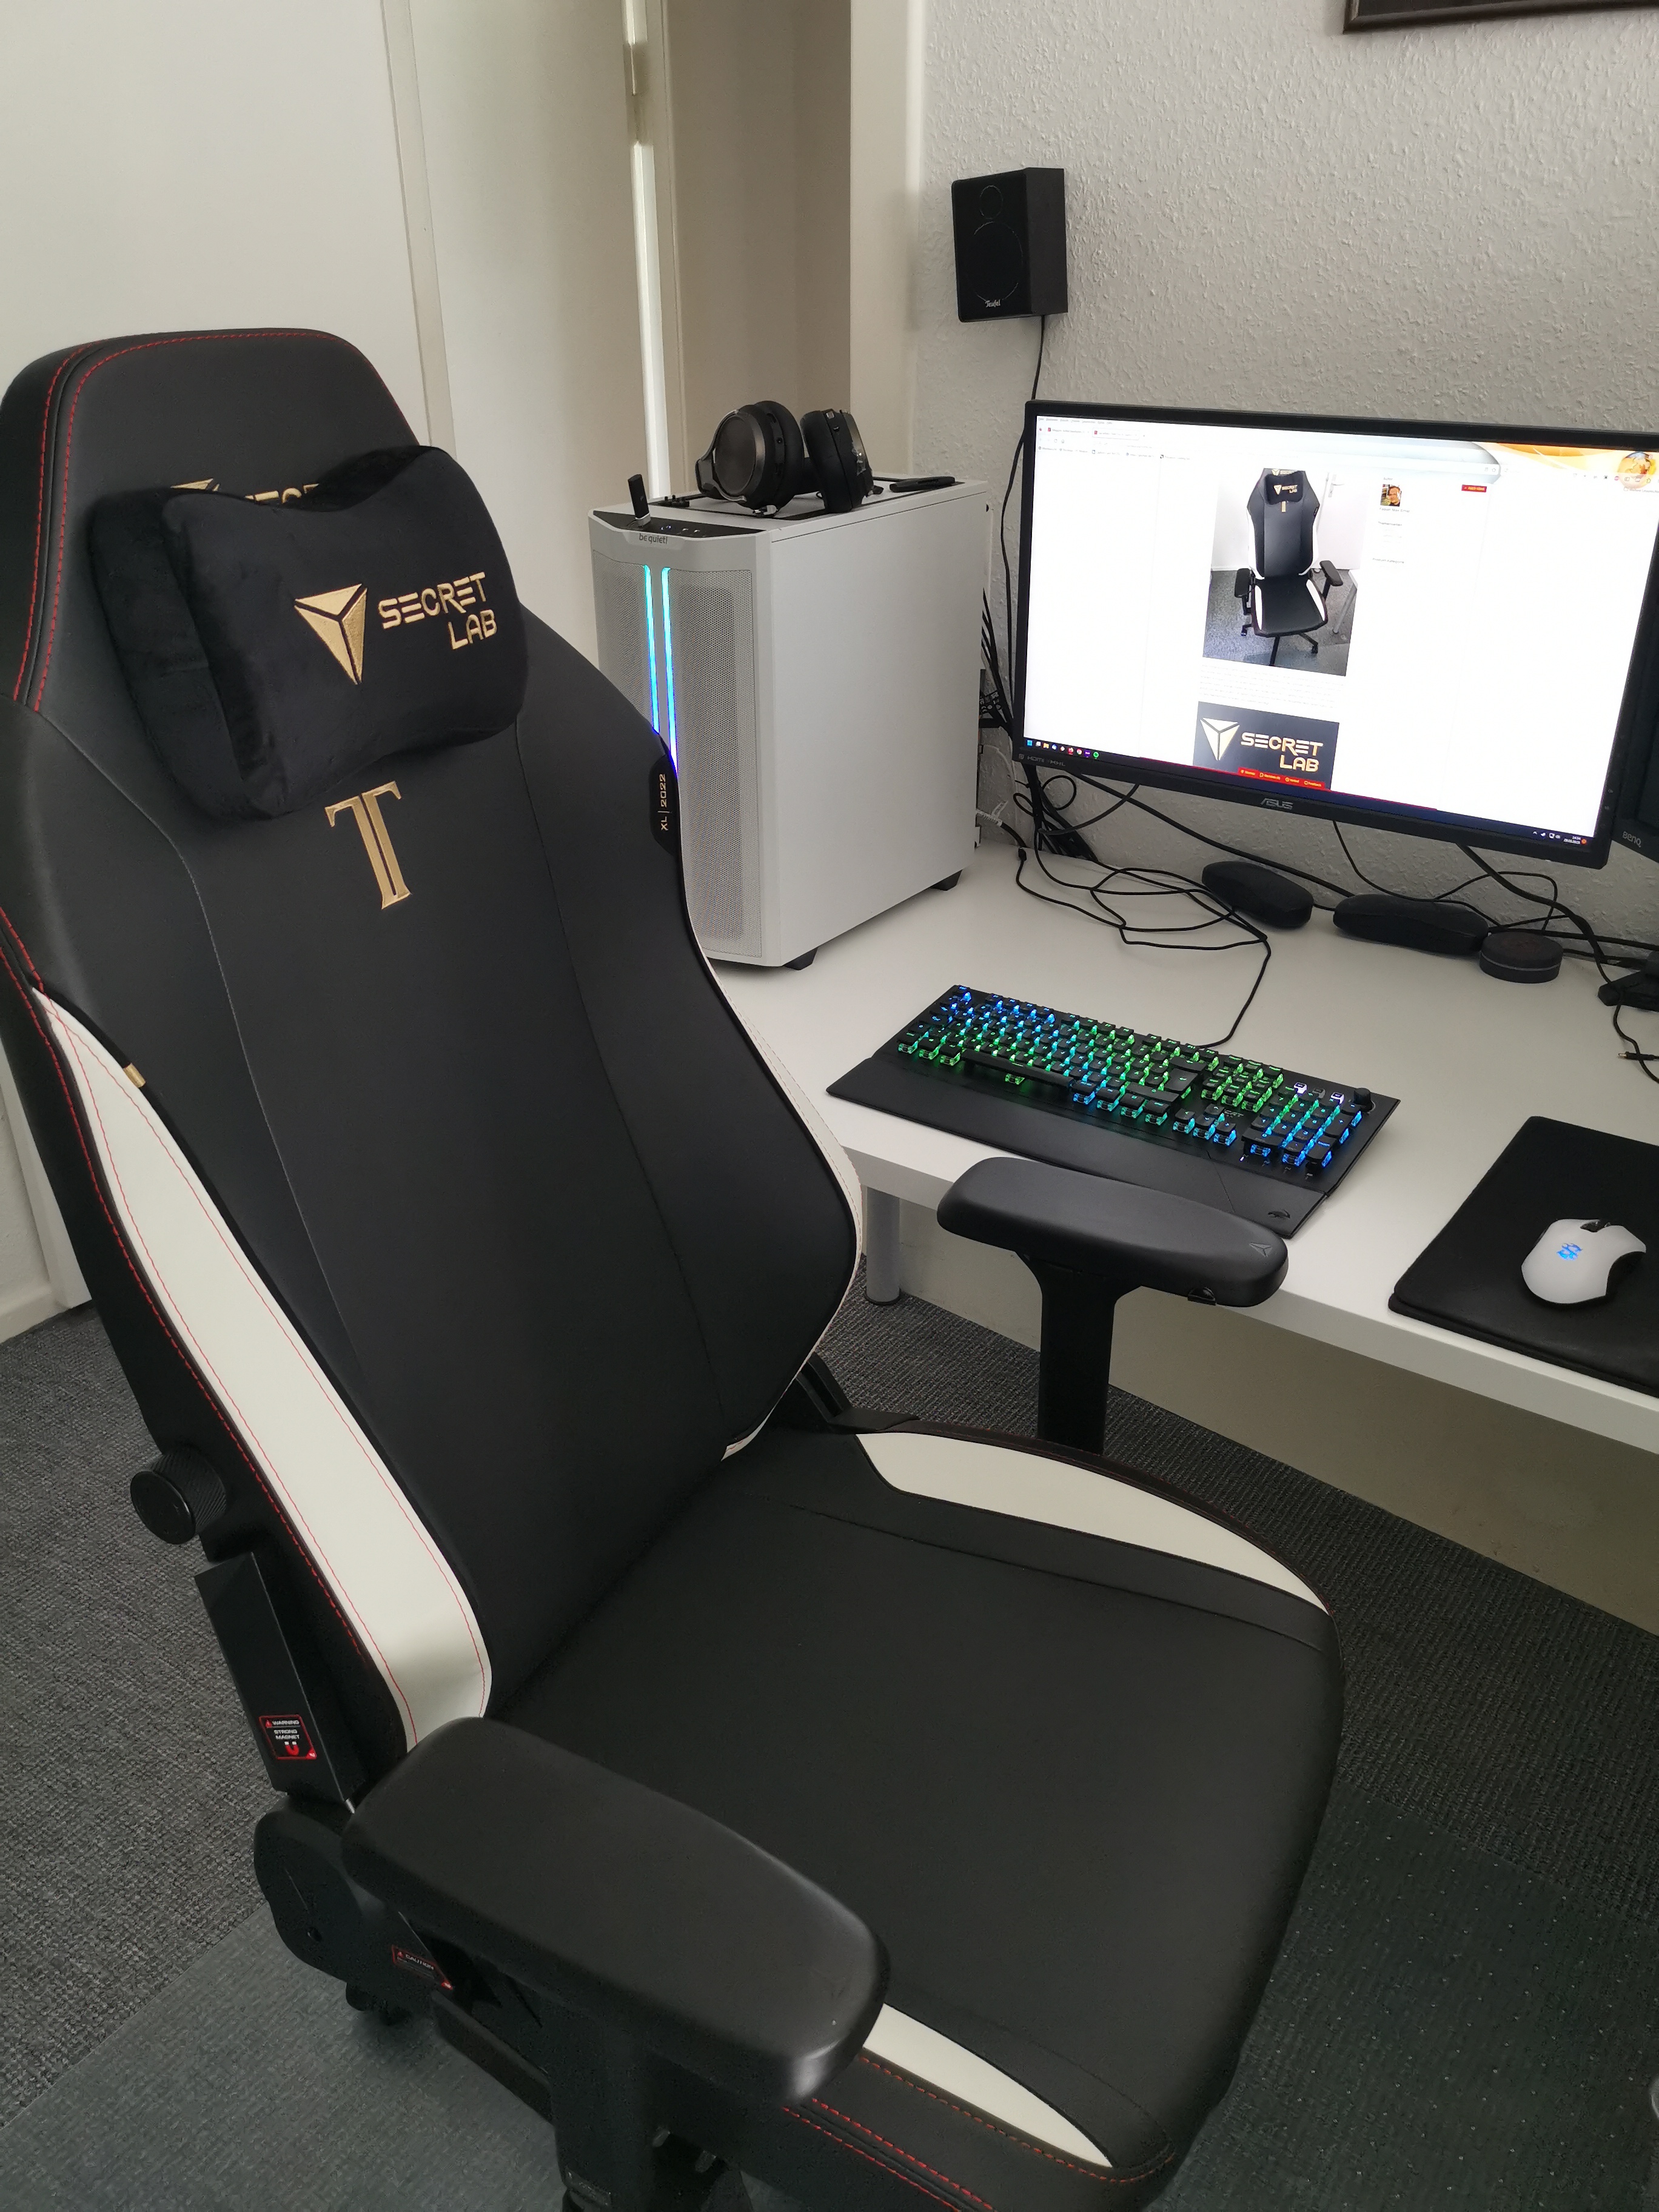 https://bilder.schottenland.de/magazin/42174-Secretlab-Titan-Evo-Gaming-Chair-Fertig